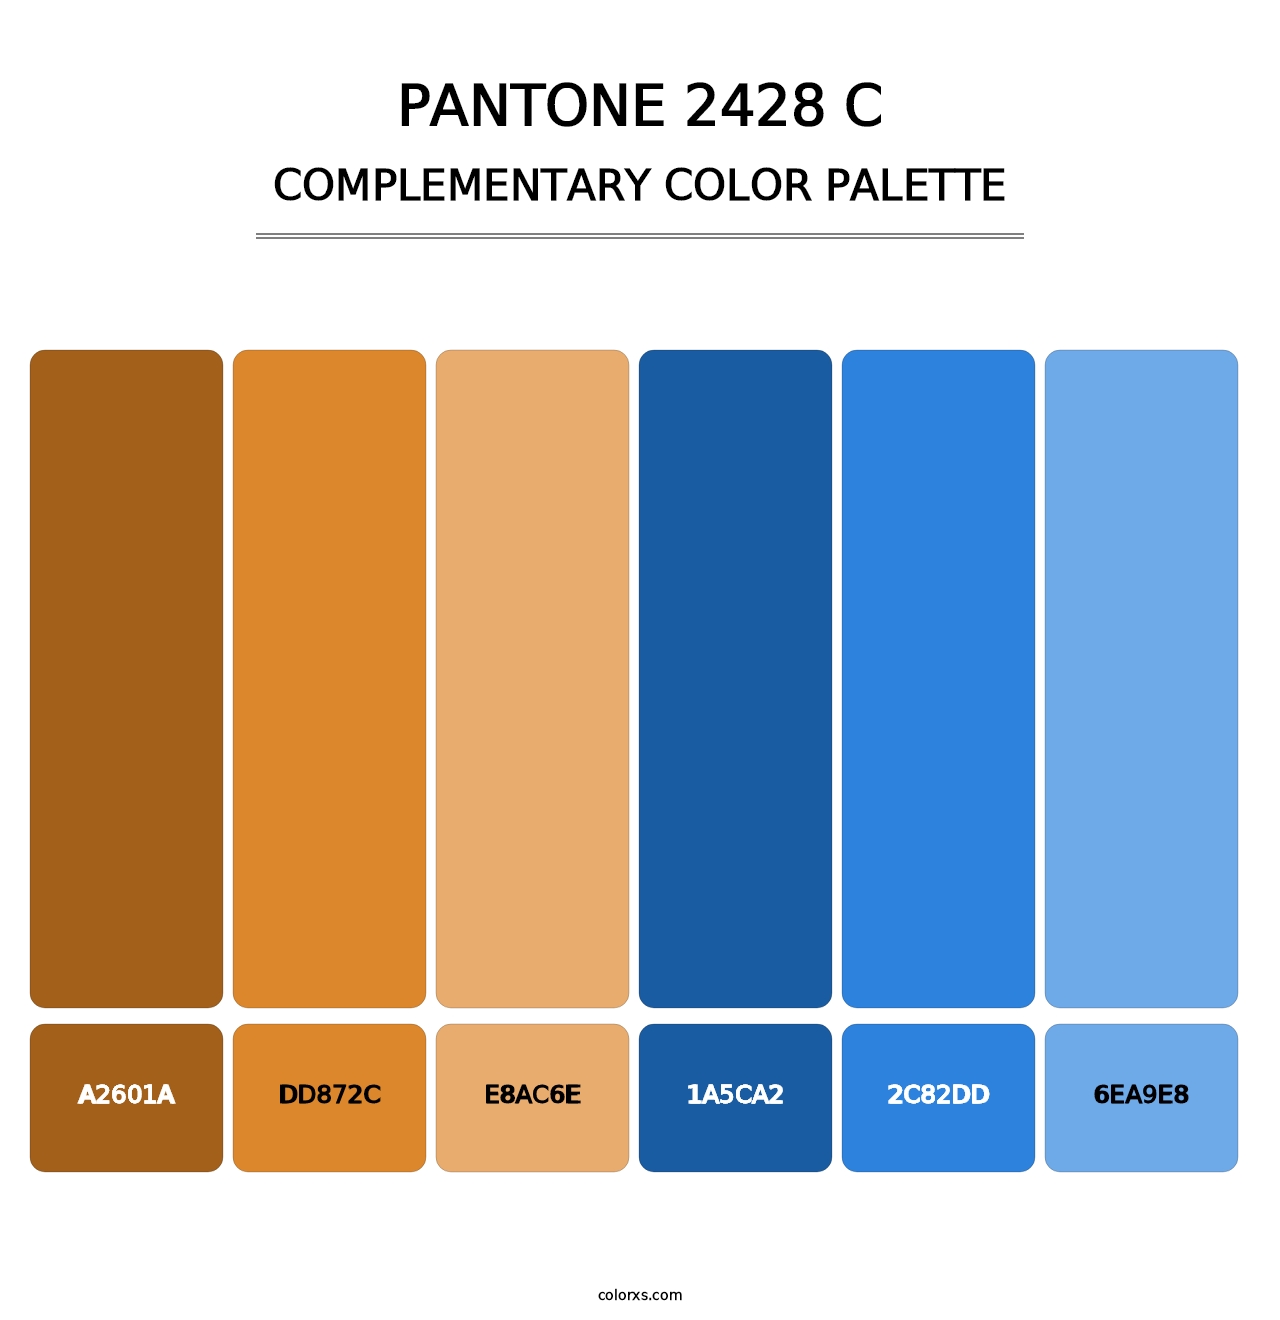 PANTONE 2428 C - Complementary Color Palette